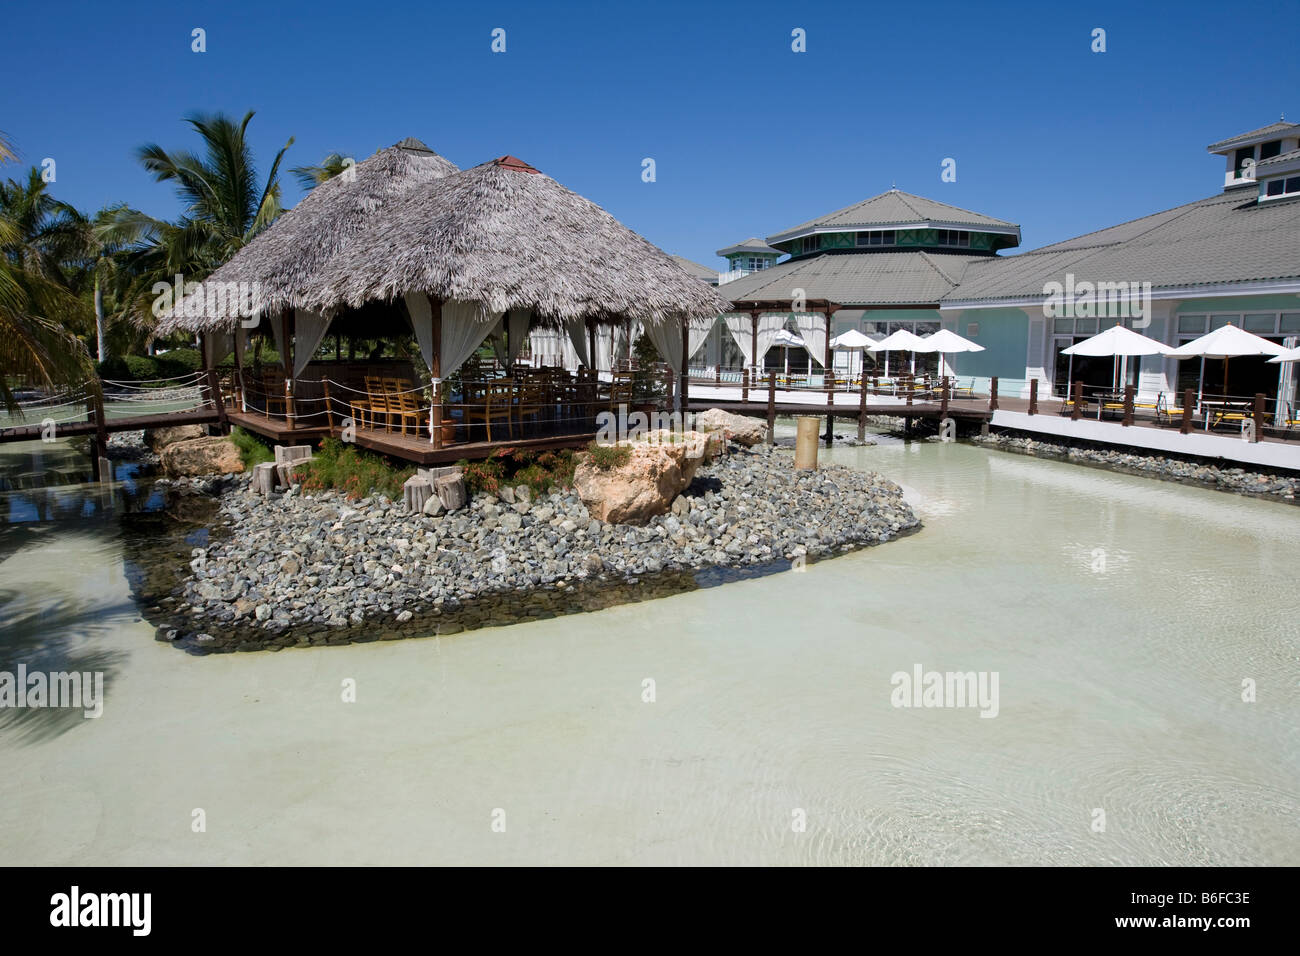 Tryp Peninsula hotel, Varadero, Cuba, Caribbean, America Stock Photo